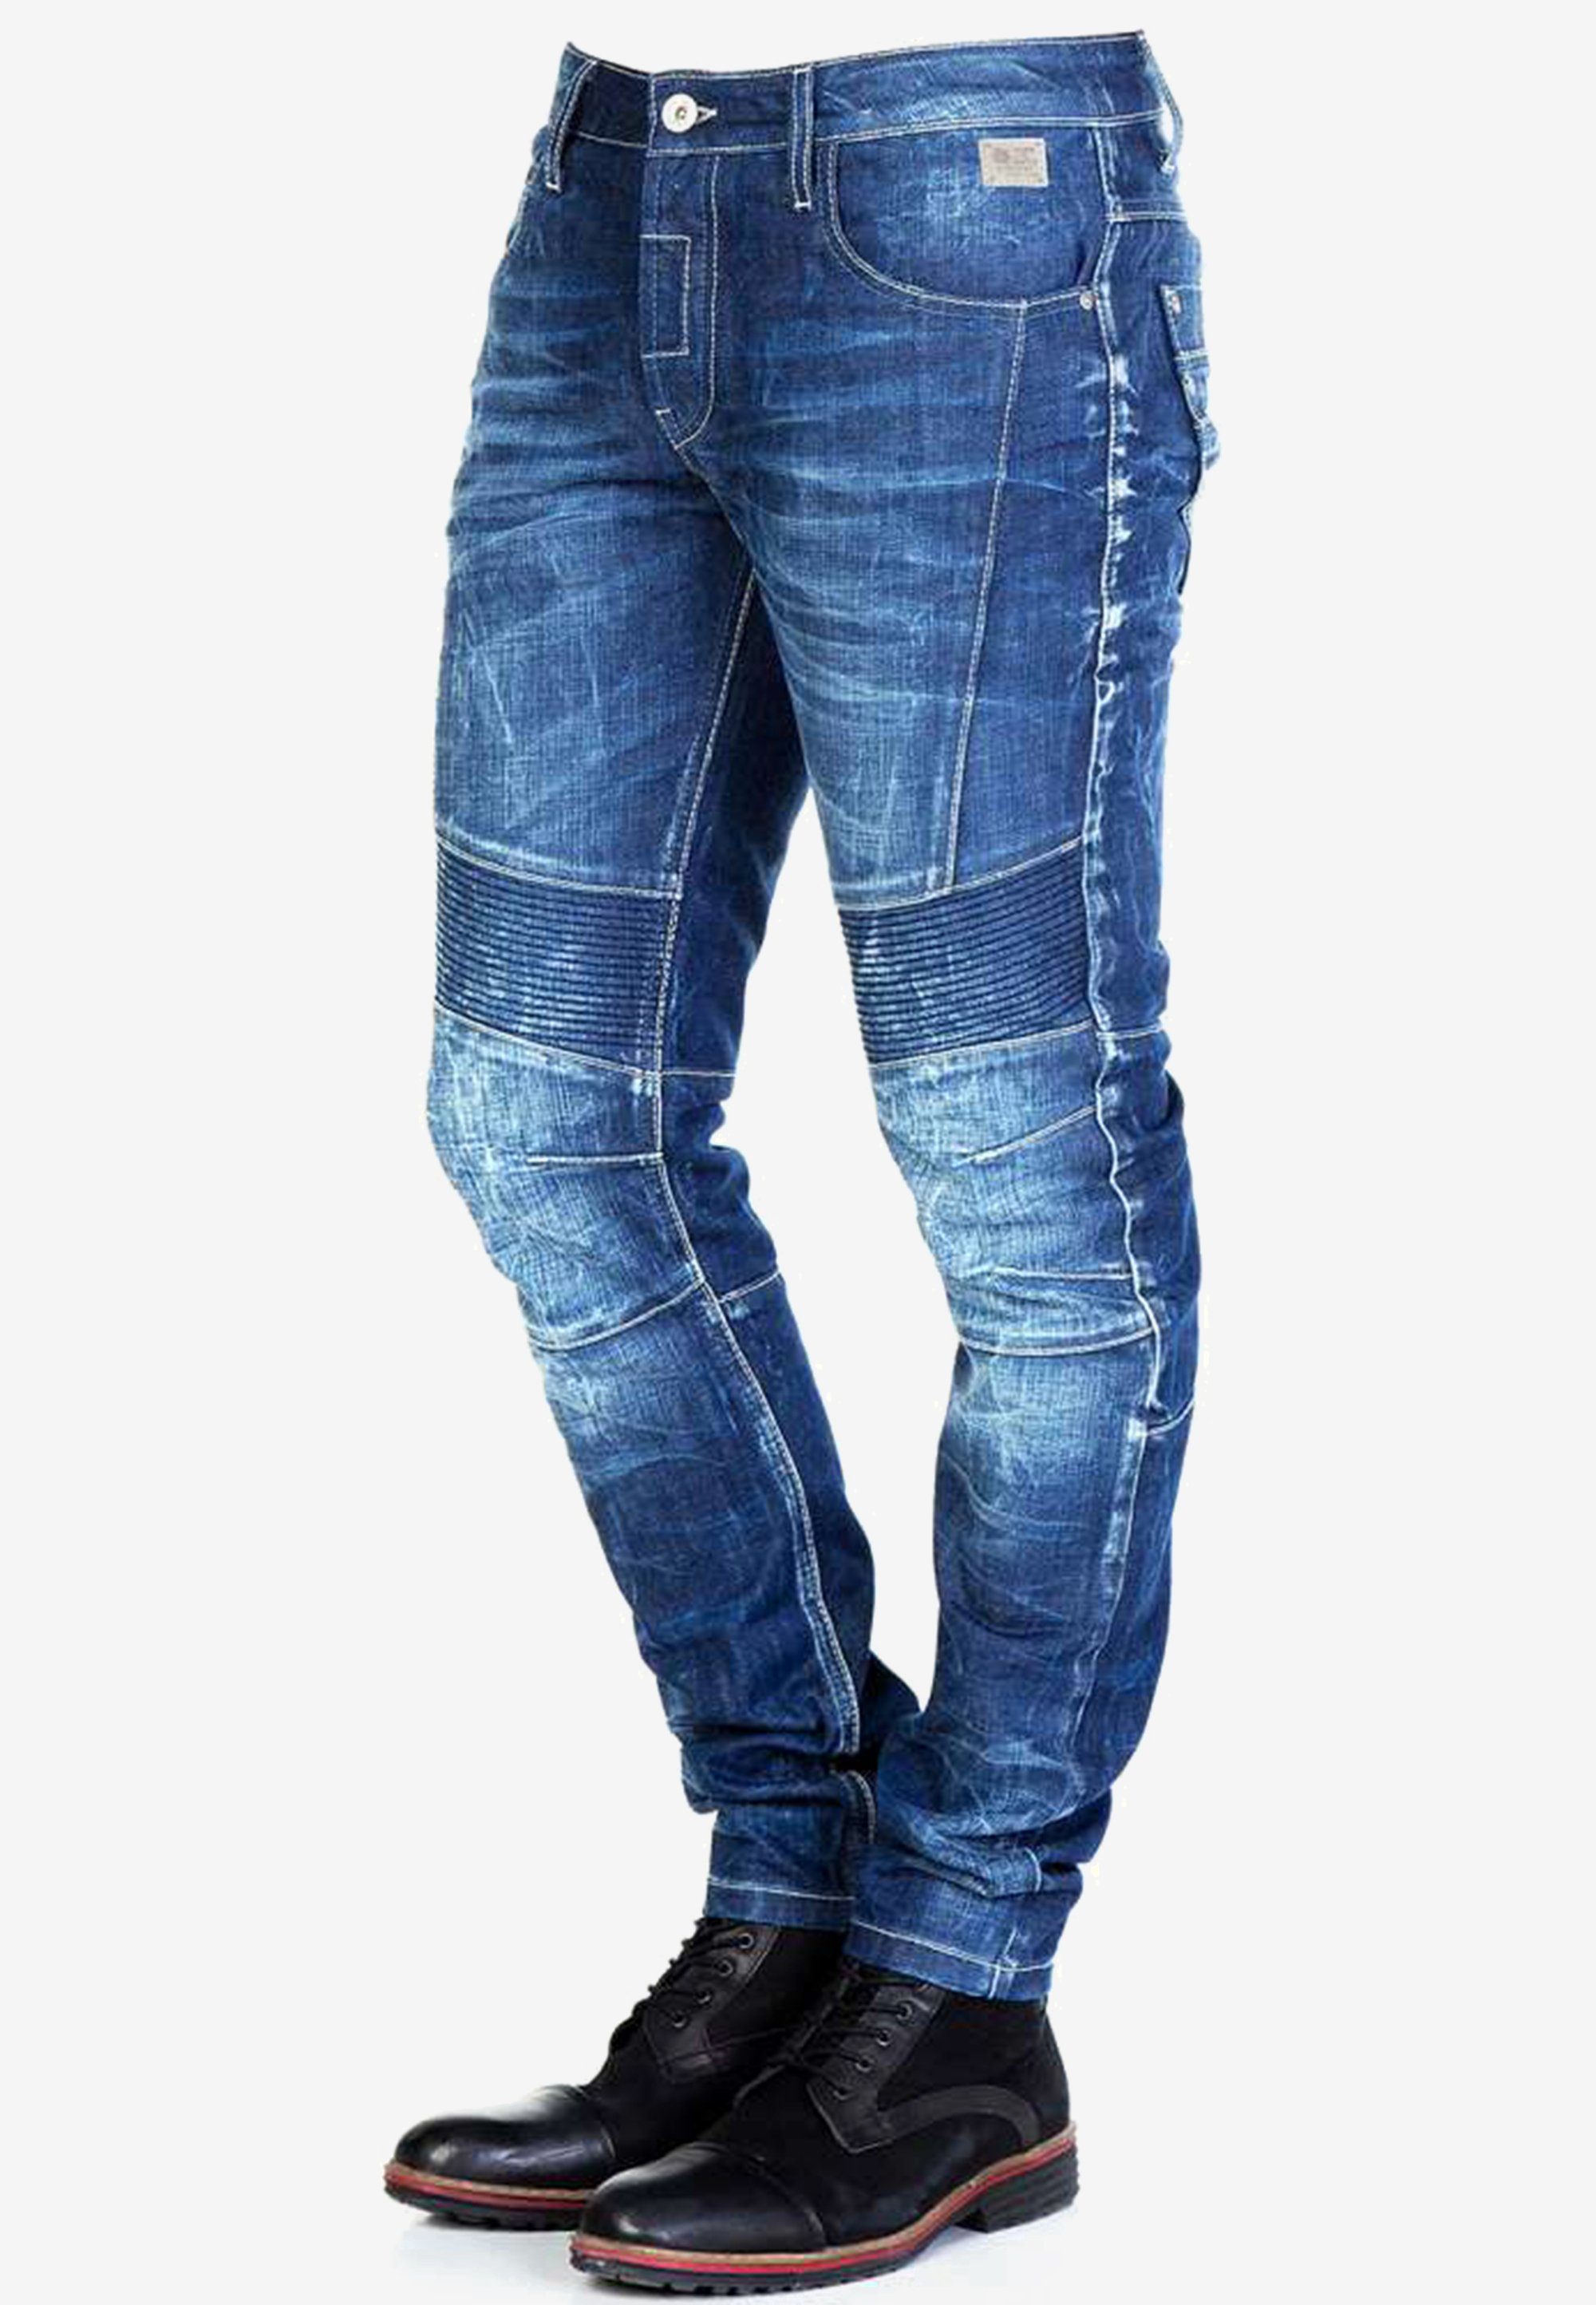 Cipo & Baxx Nahtdetails in Bequeme mit Jeans Fit coolen Straight